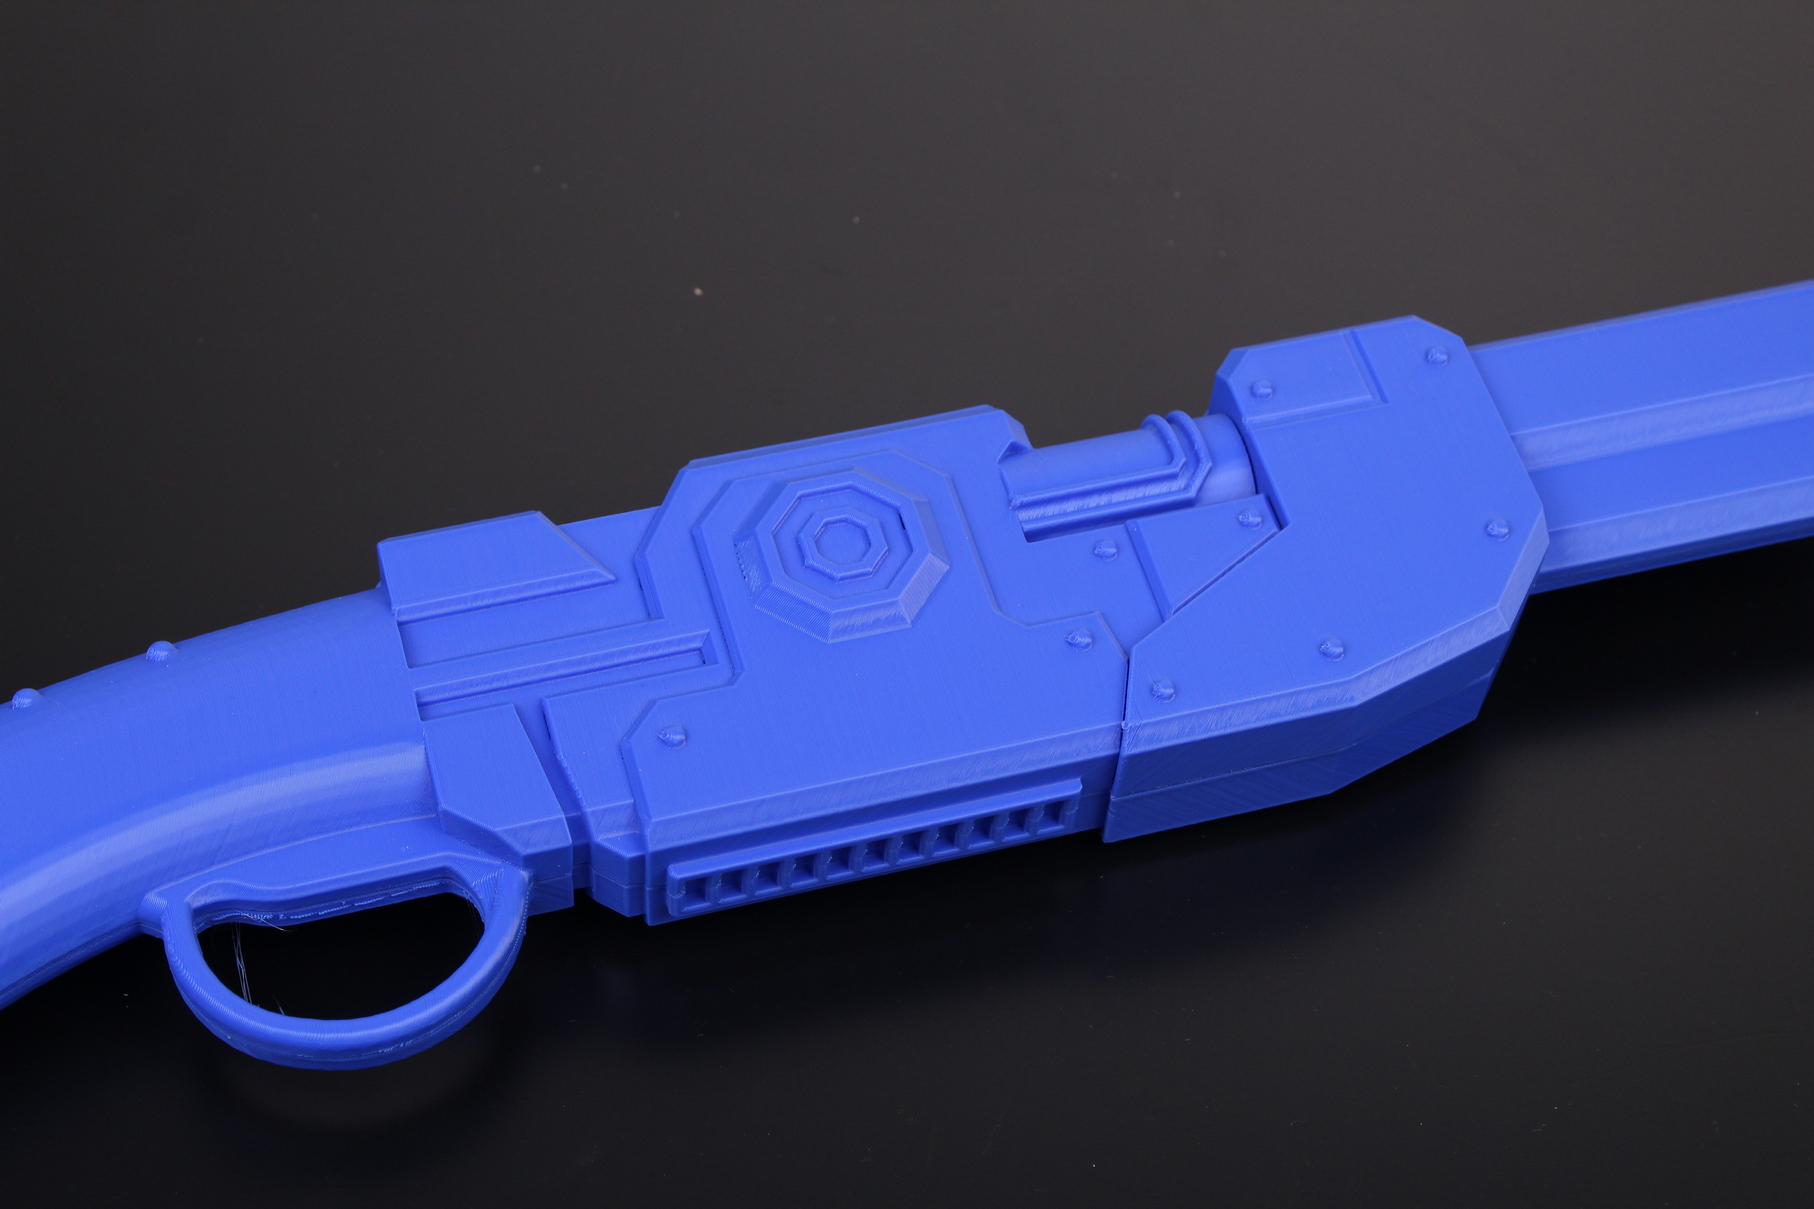 Mandalorian Rifle printed on the CR 30 3DPrintMill 6 | Creality 3DPrintMill (CR-30) Review: Belt Printer for Batch 3D Printing